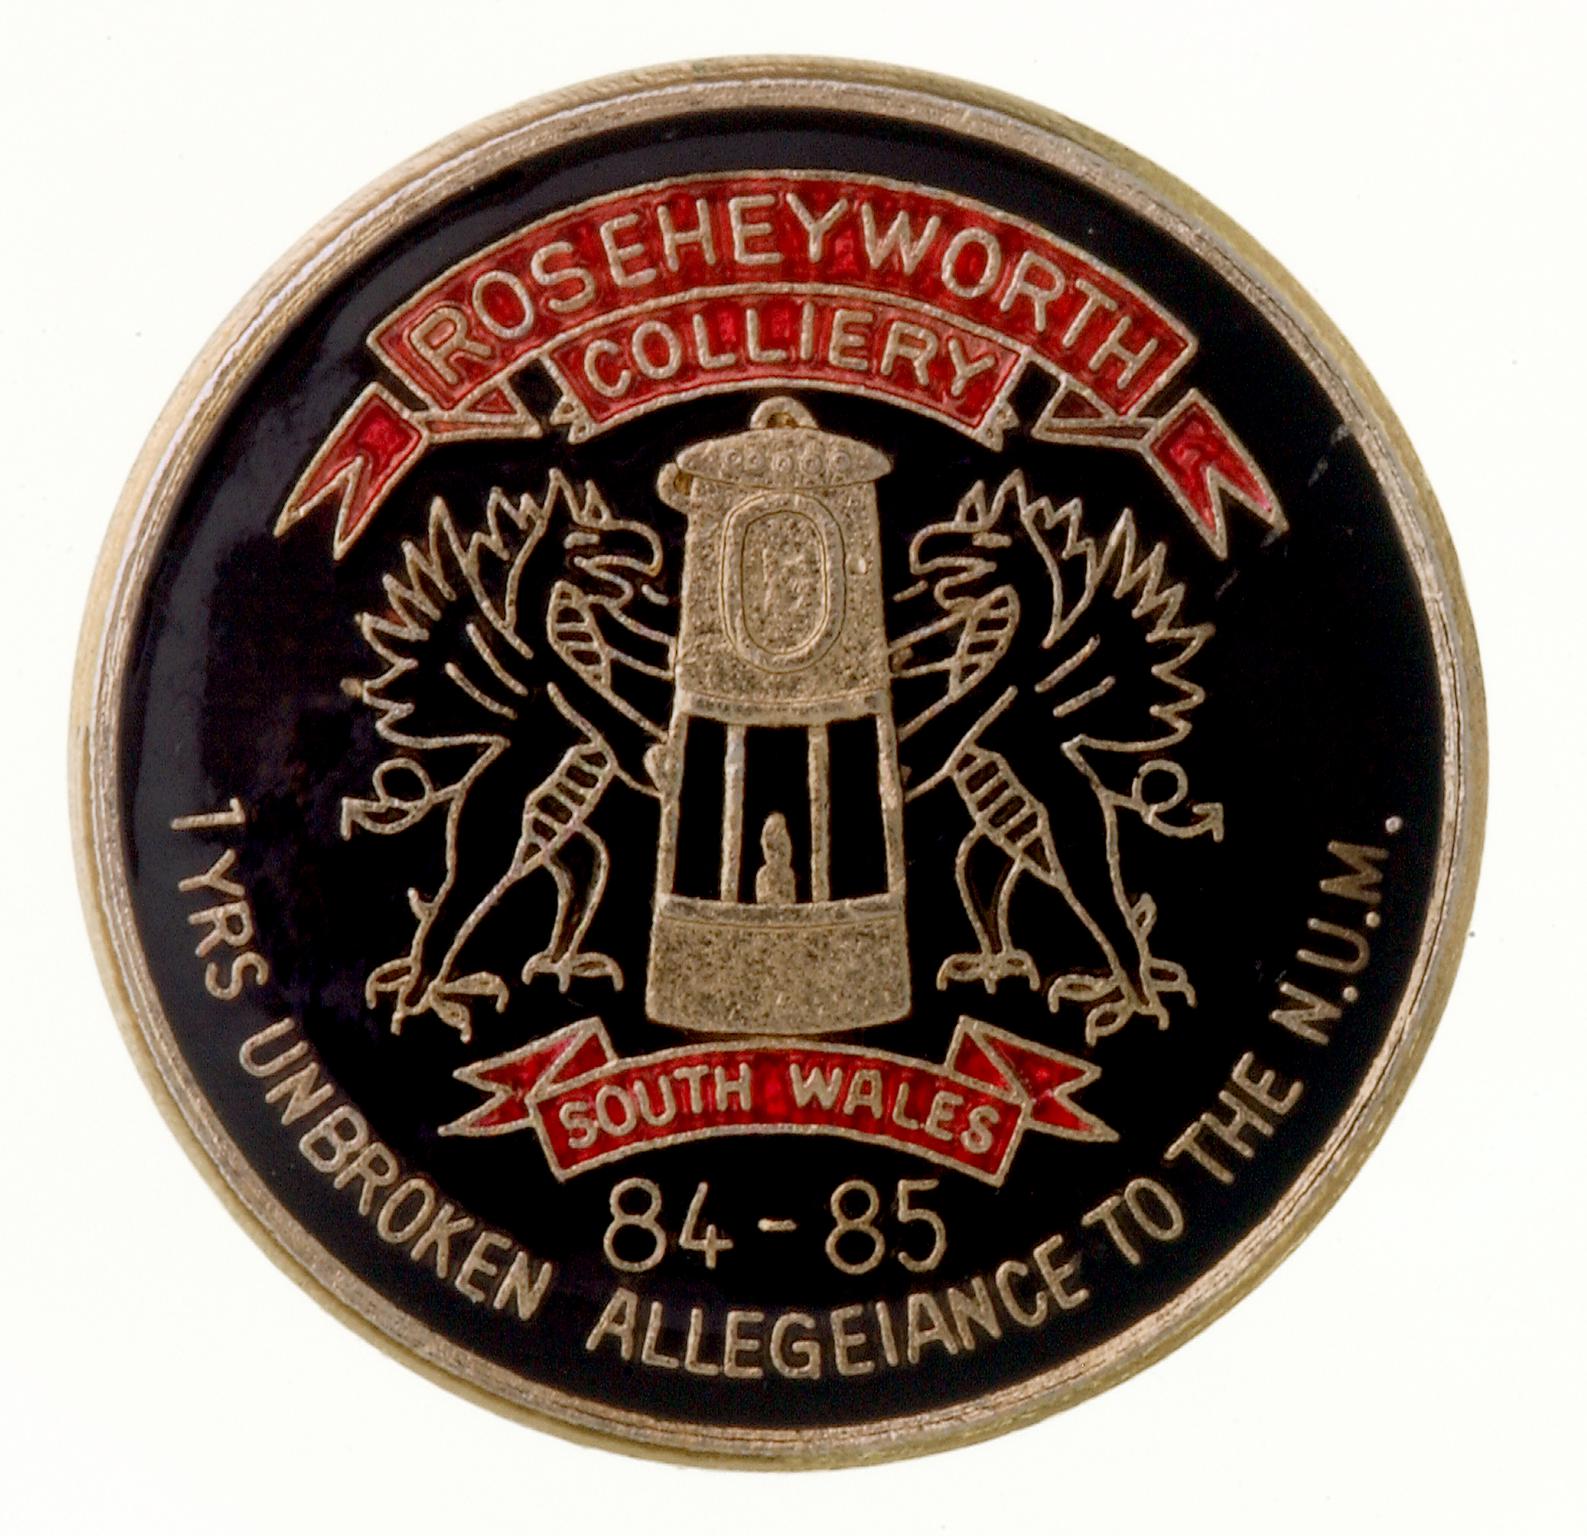 Rose Heyworth Colliery, badge